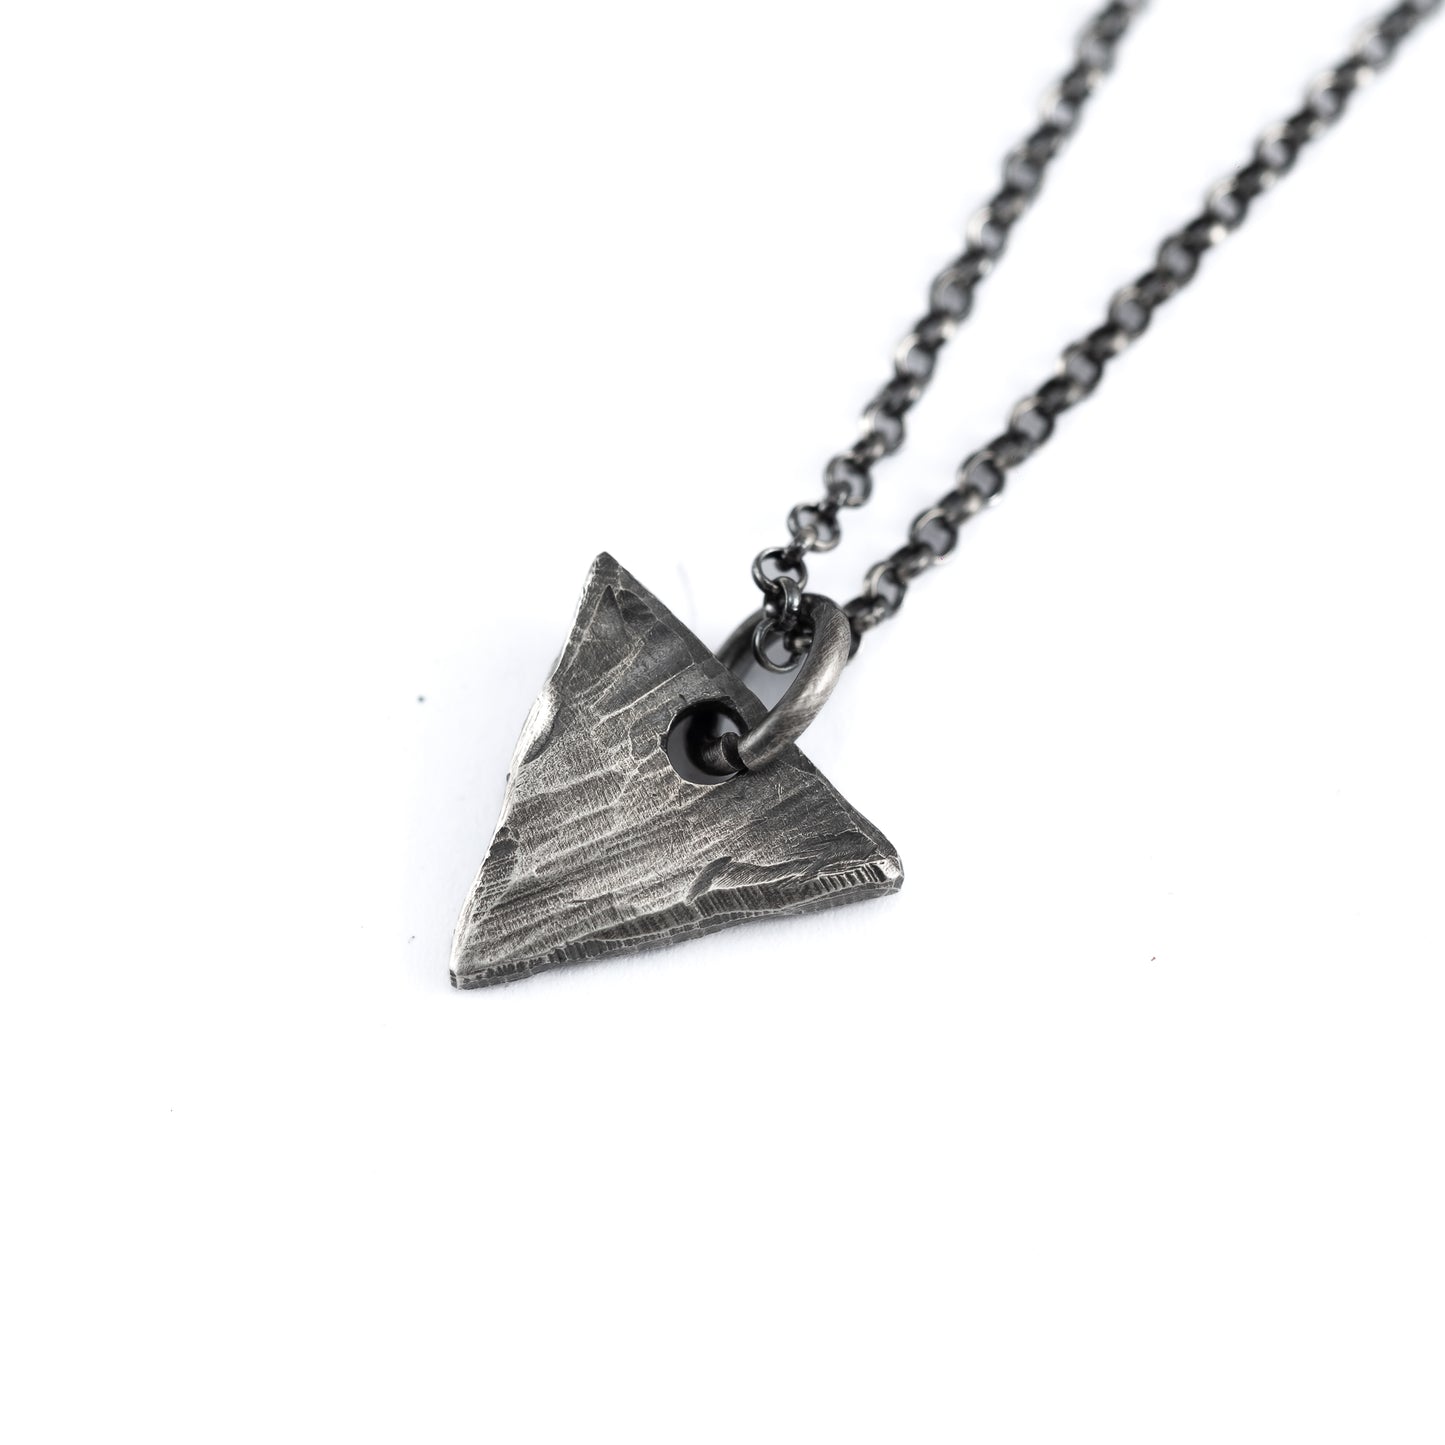 Rustic Triangle pendant